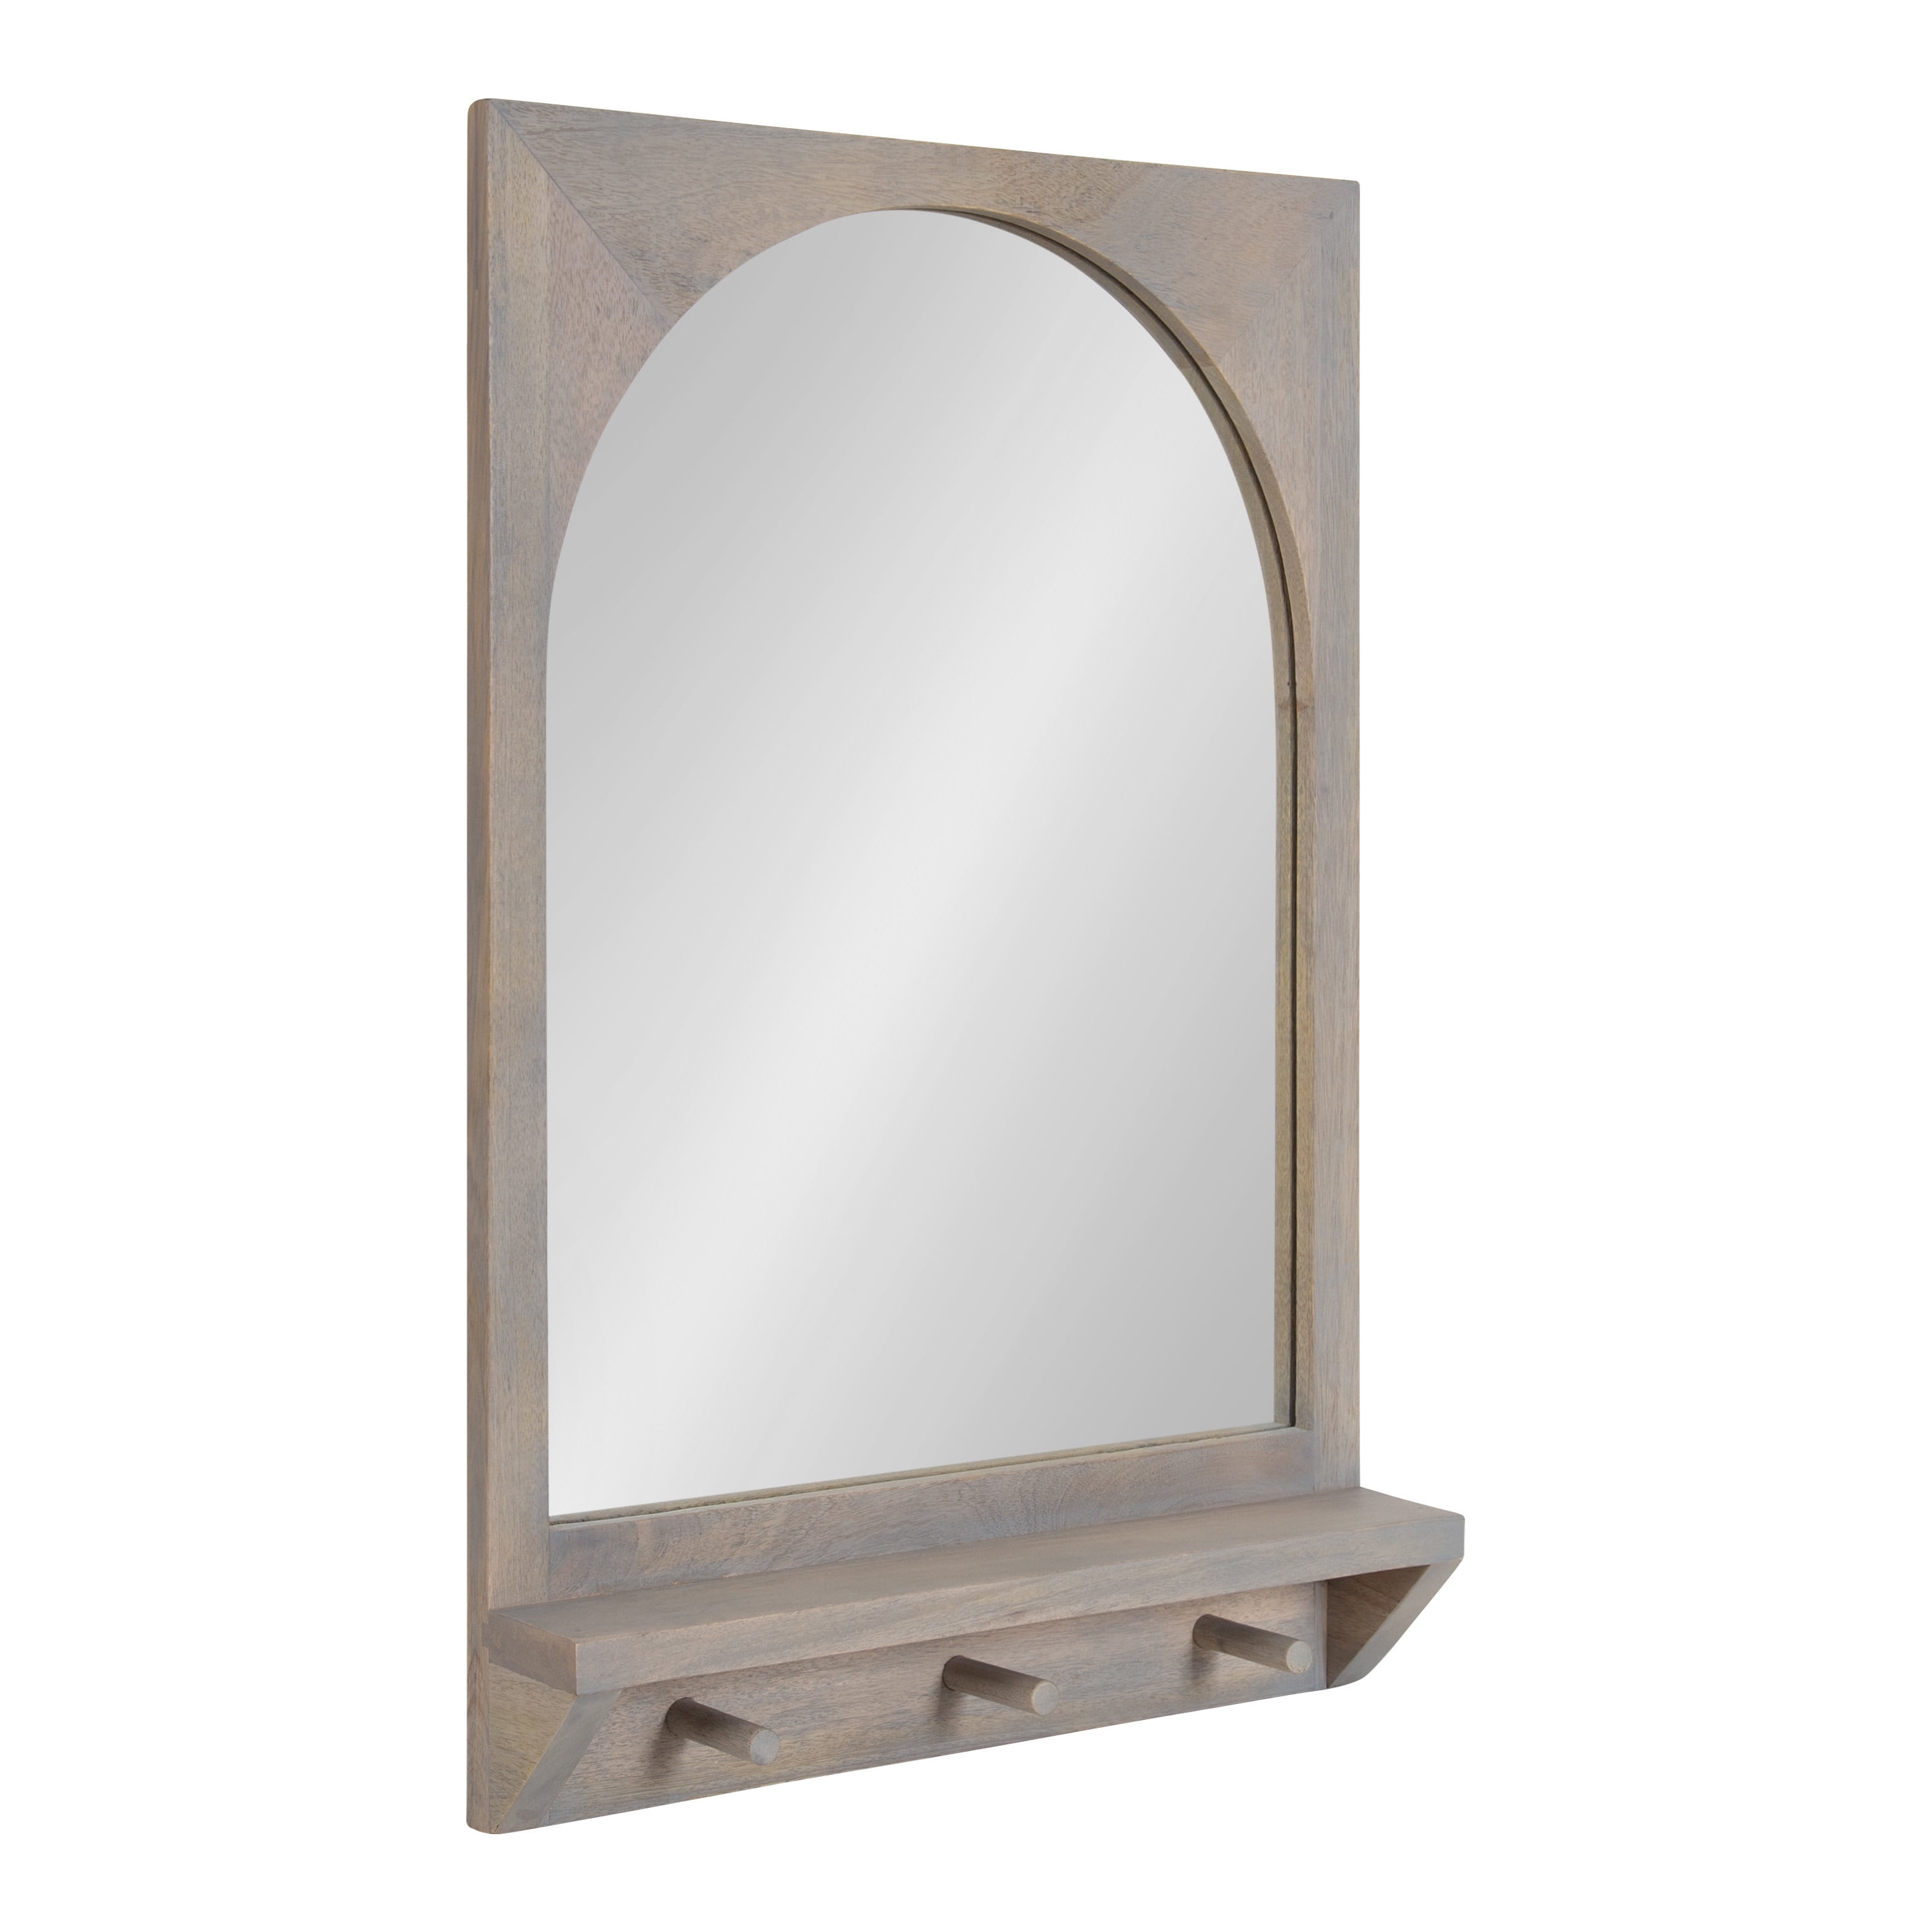 Homecho Bathroom Mirror with Shelf and 3 Hooks, Wooden Wall